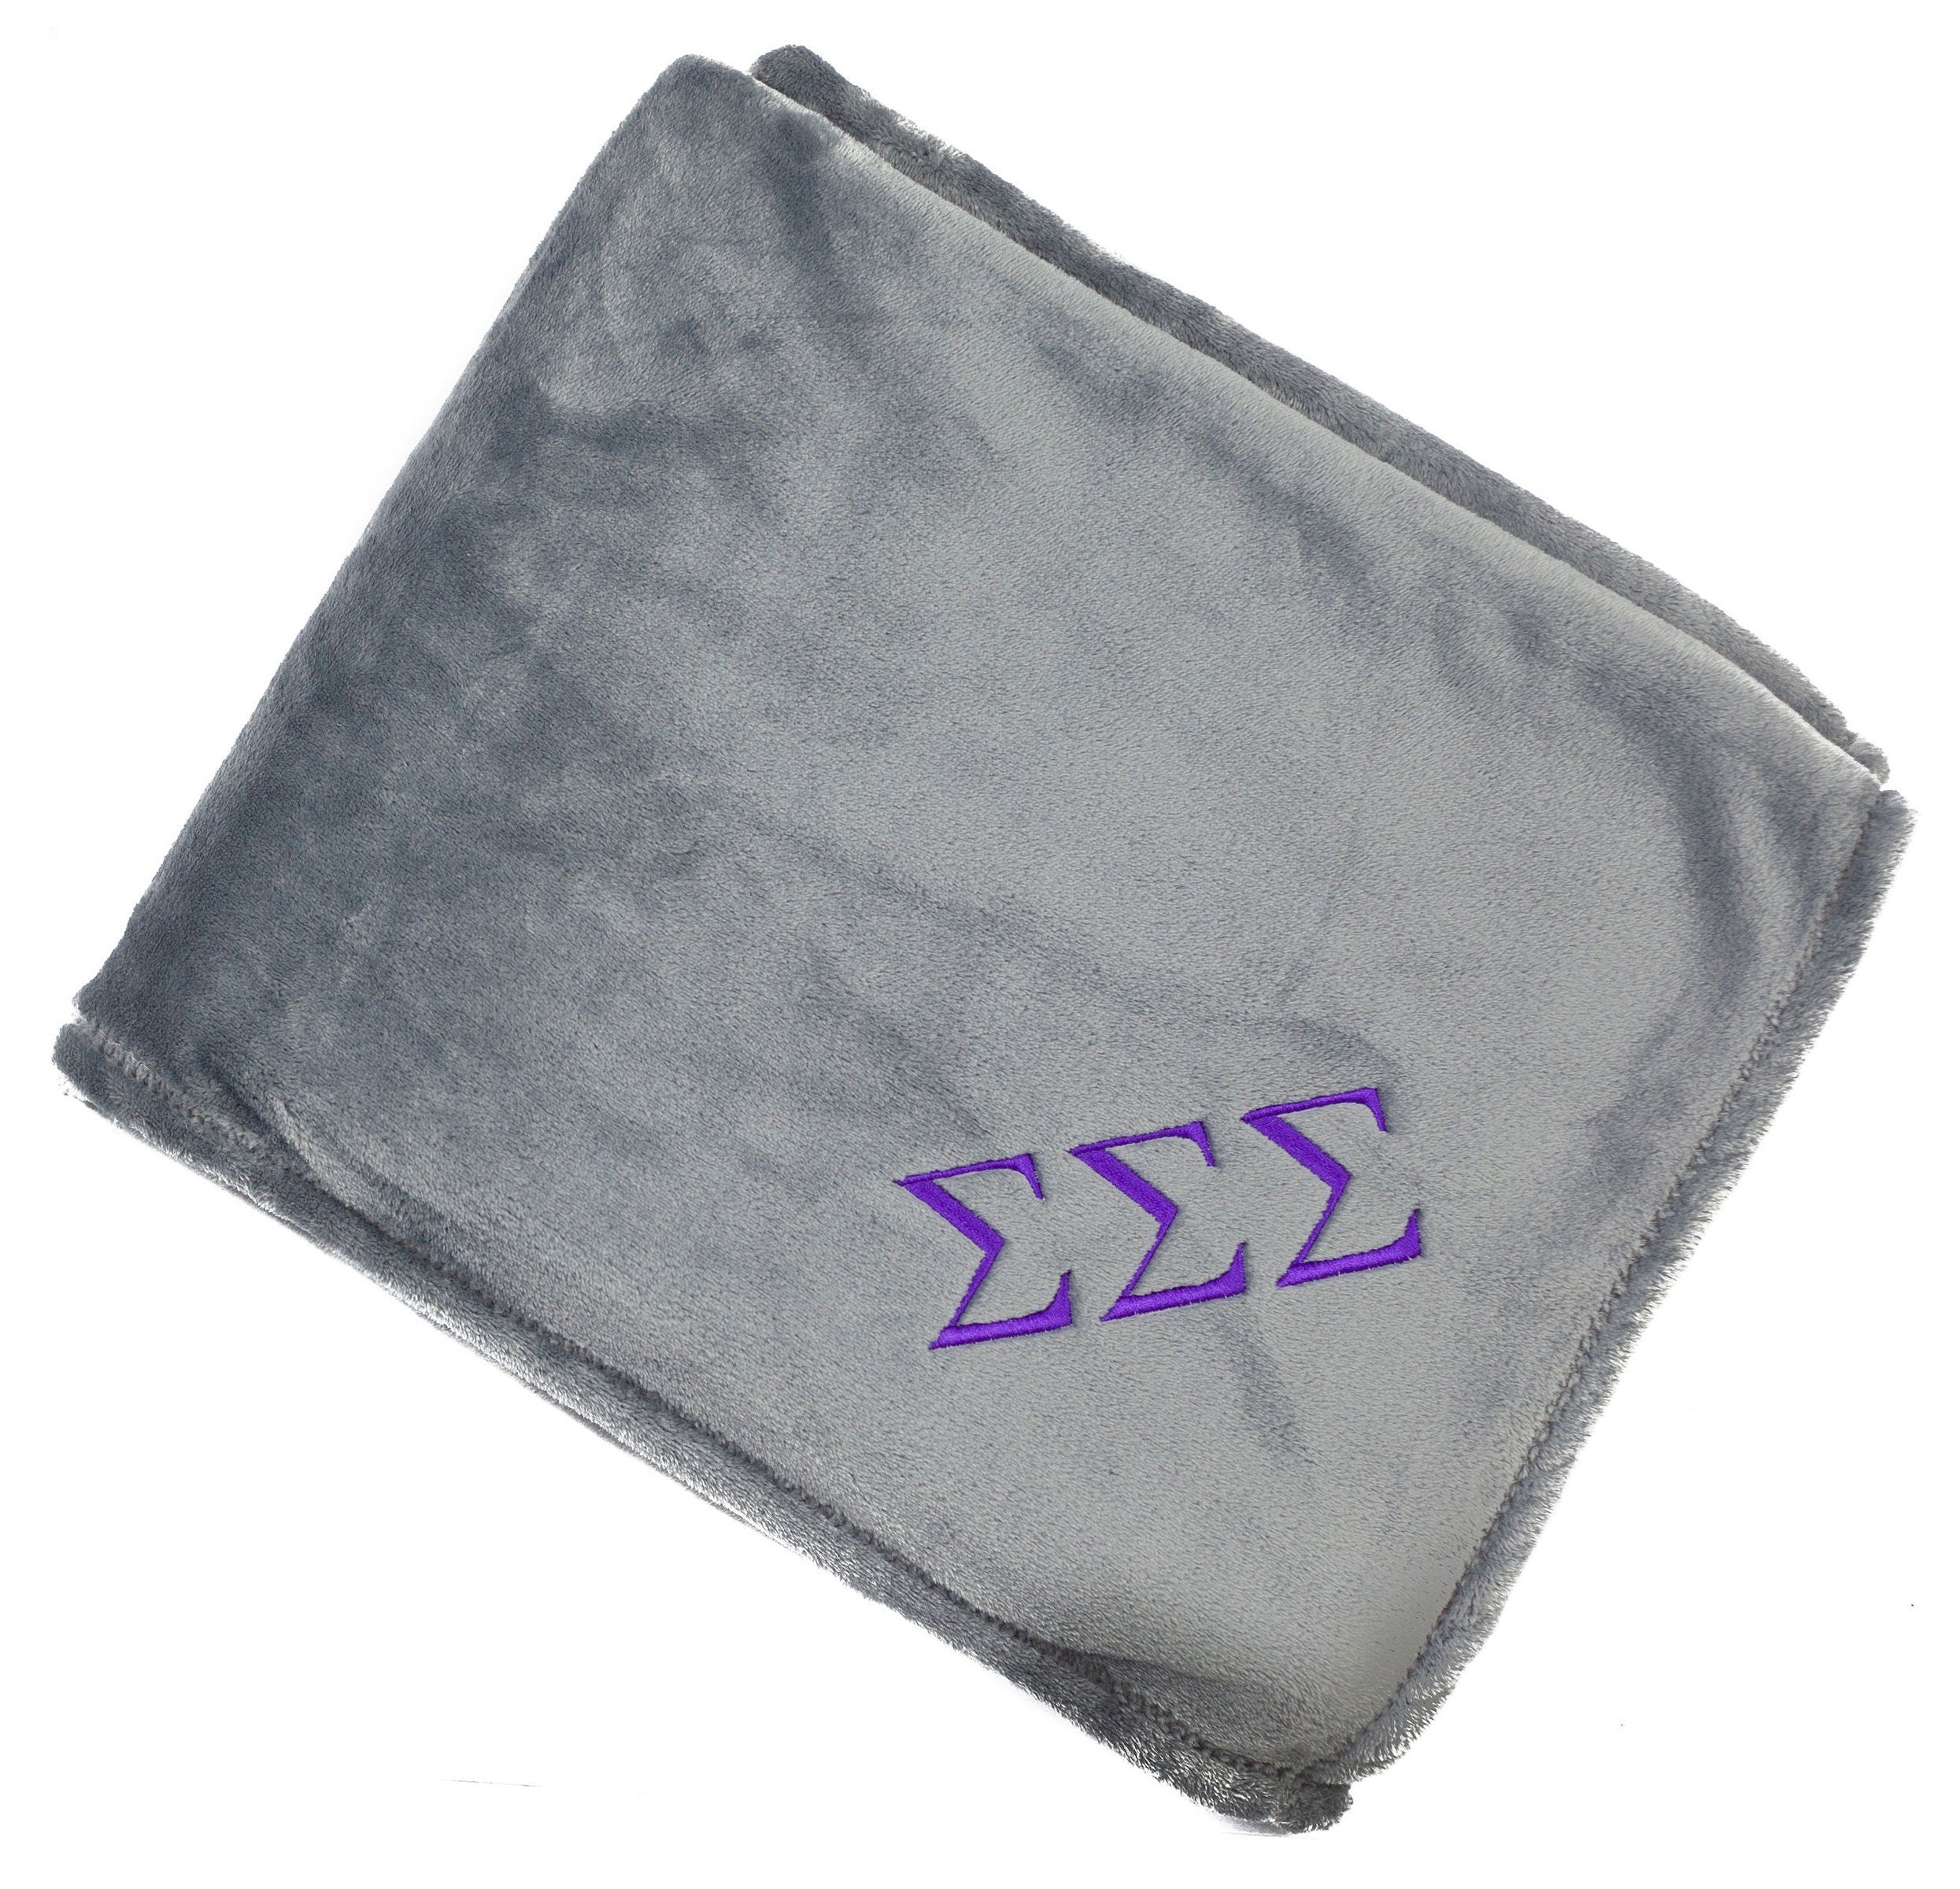 Sigma Sigma Sigma Plush Throw Blanket - Grey/Purple - Go Greek Chic